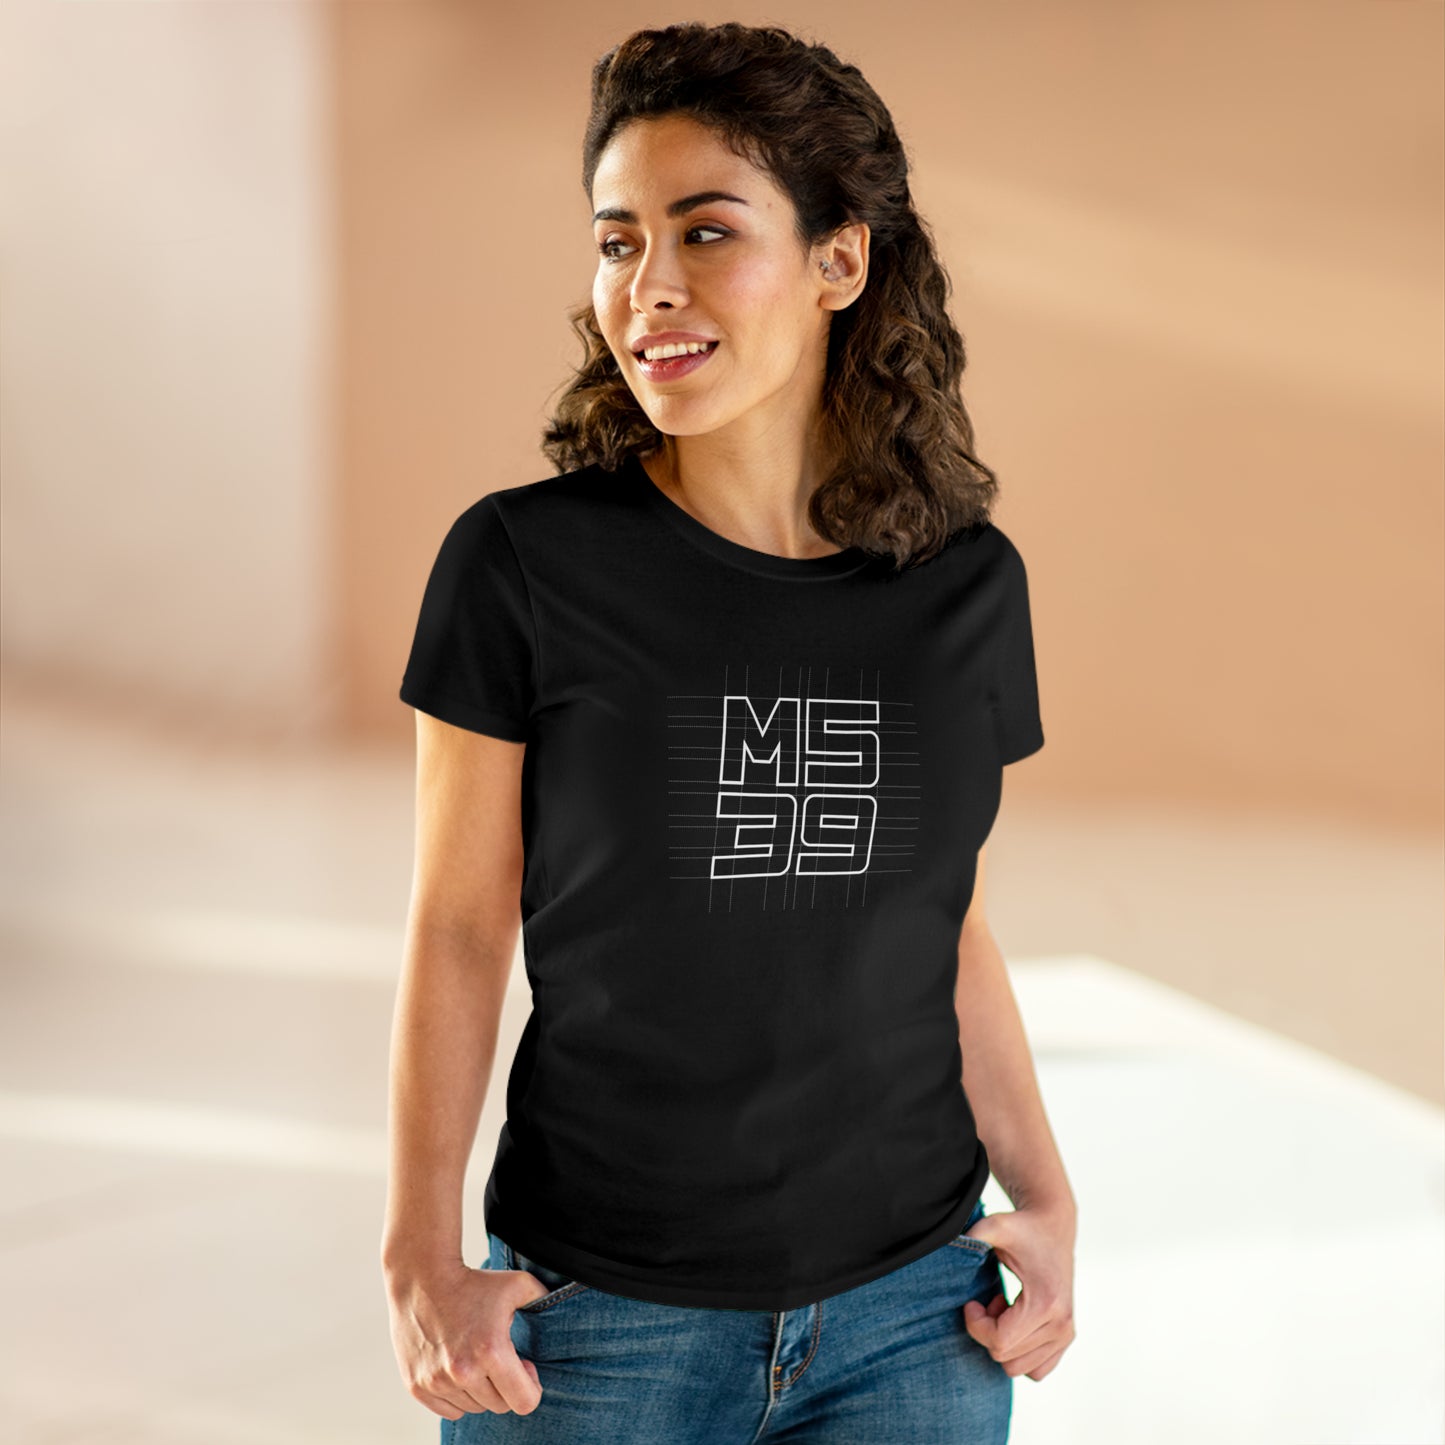 M539 Restorations Blueprint Logo Tee Women